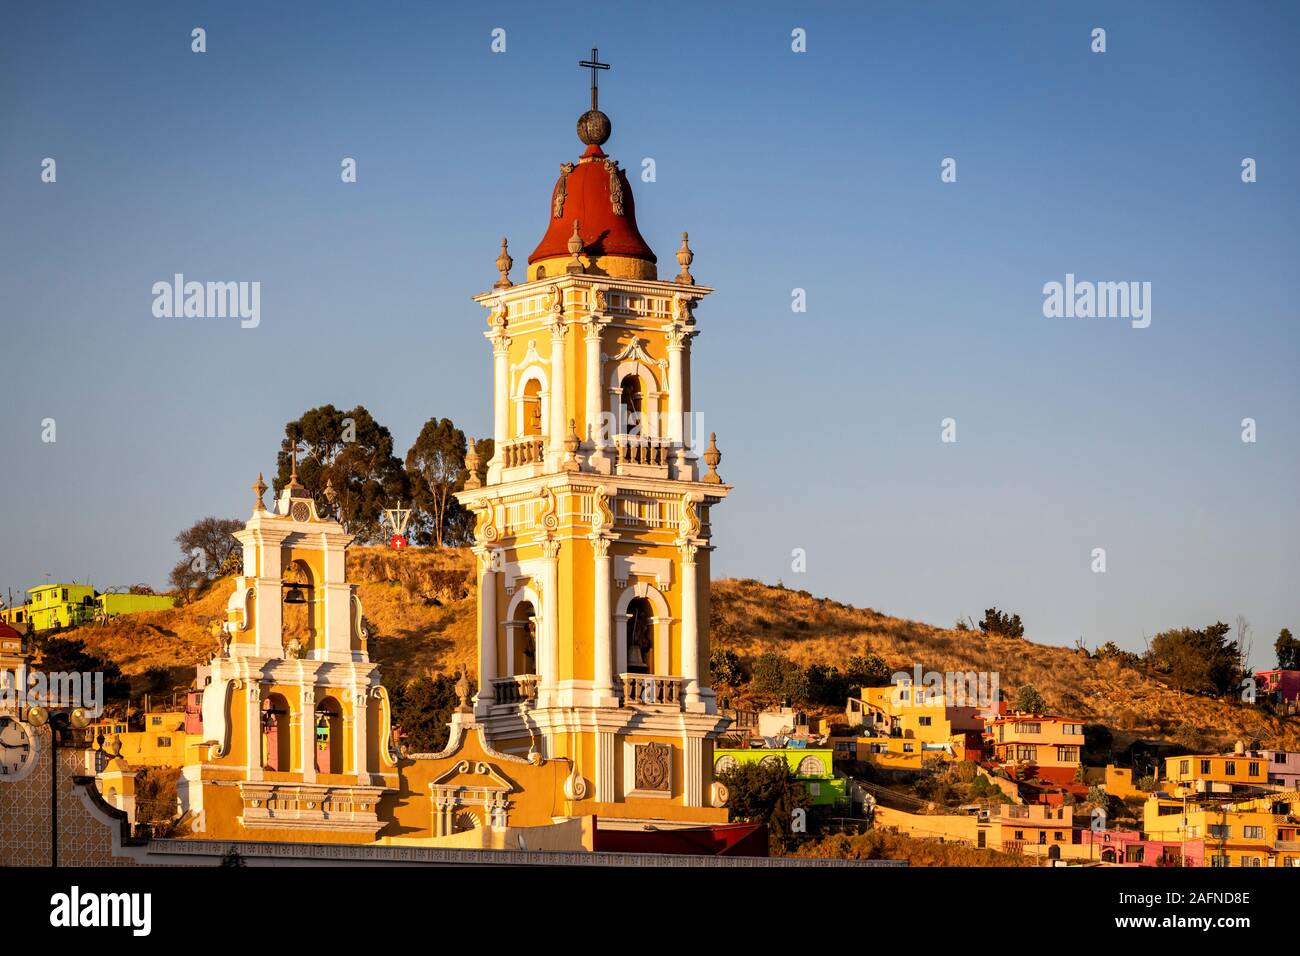 Turm von El Carment Kirche bei Sonnenuntergang, Toluca, Mexiko. Stockfoto